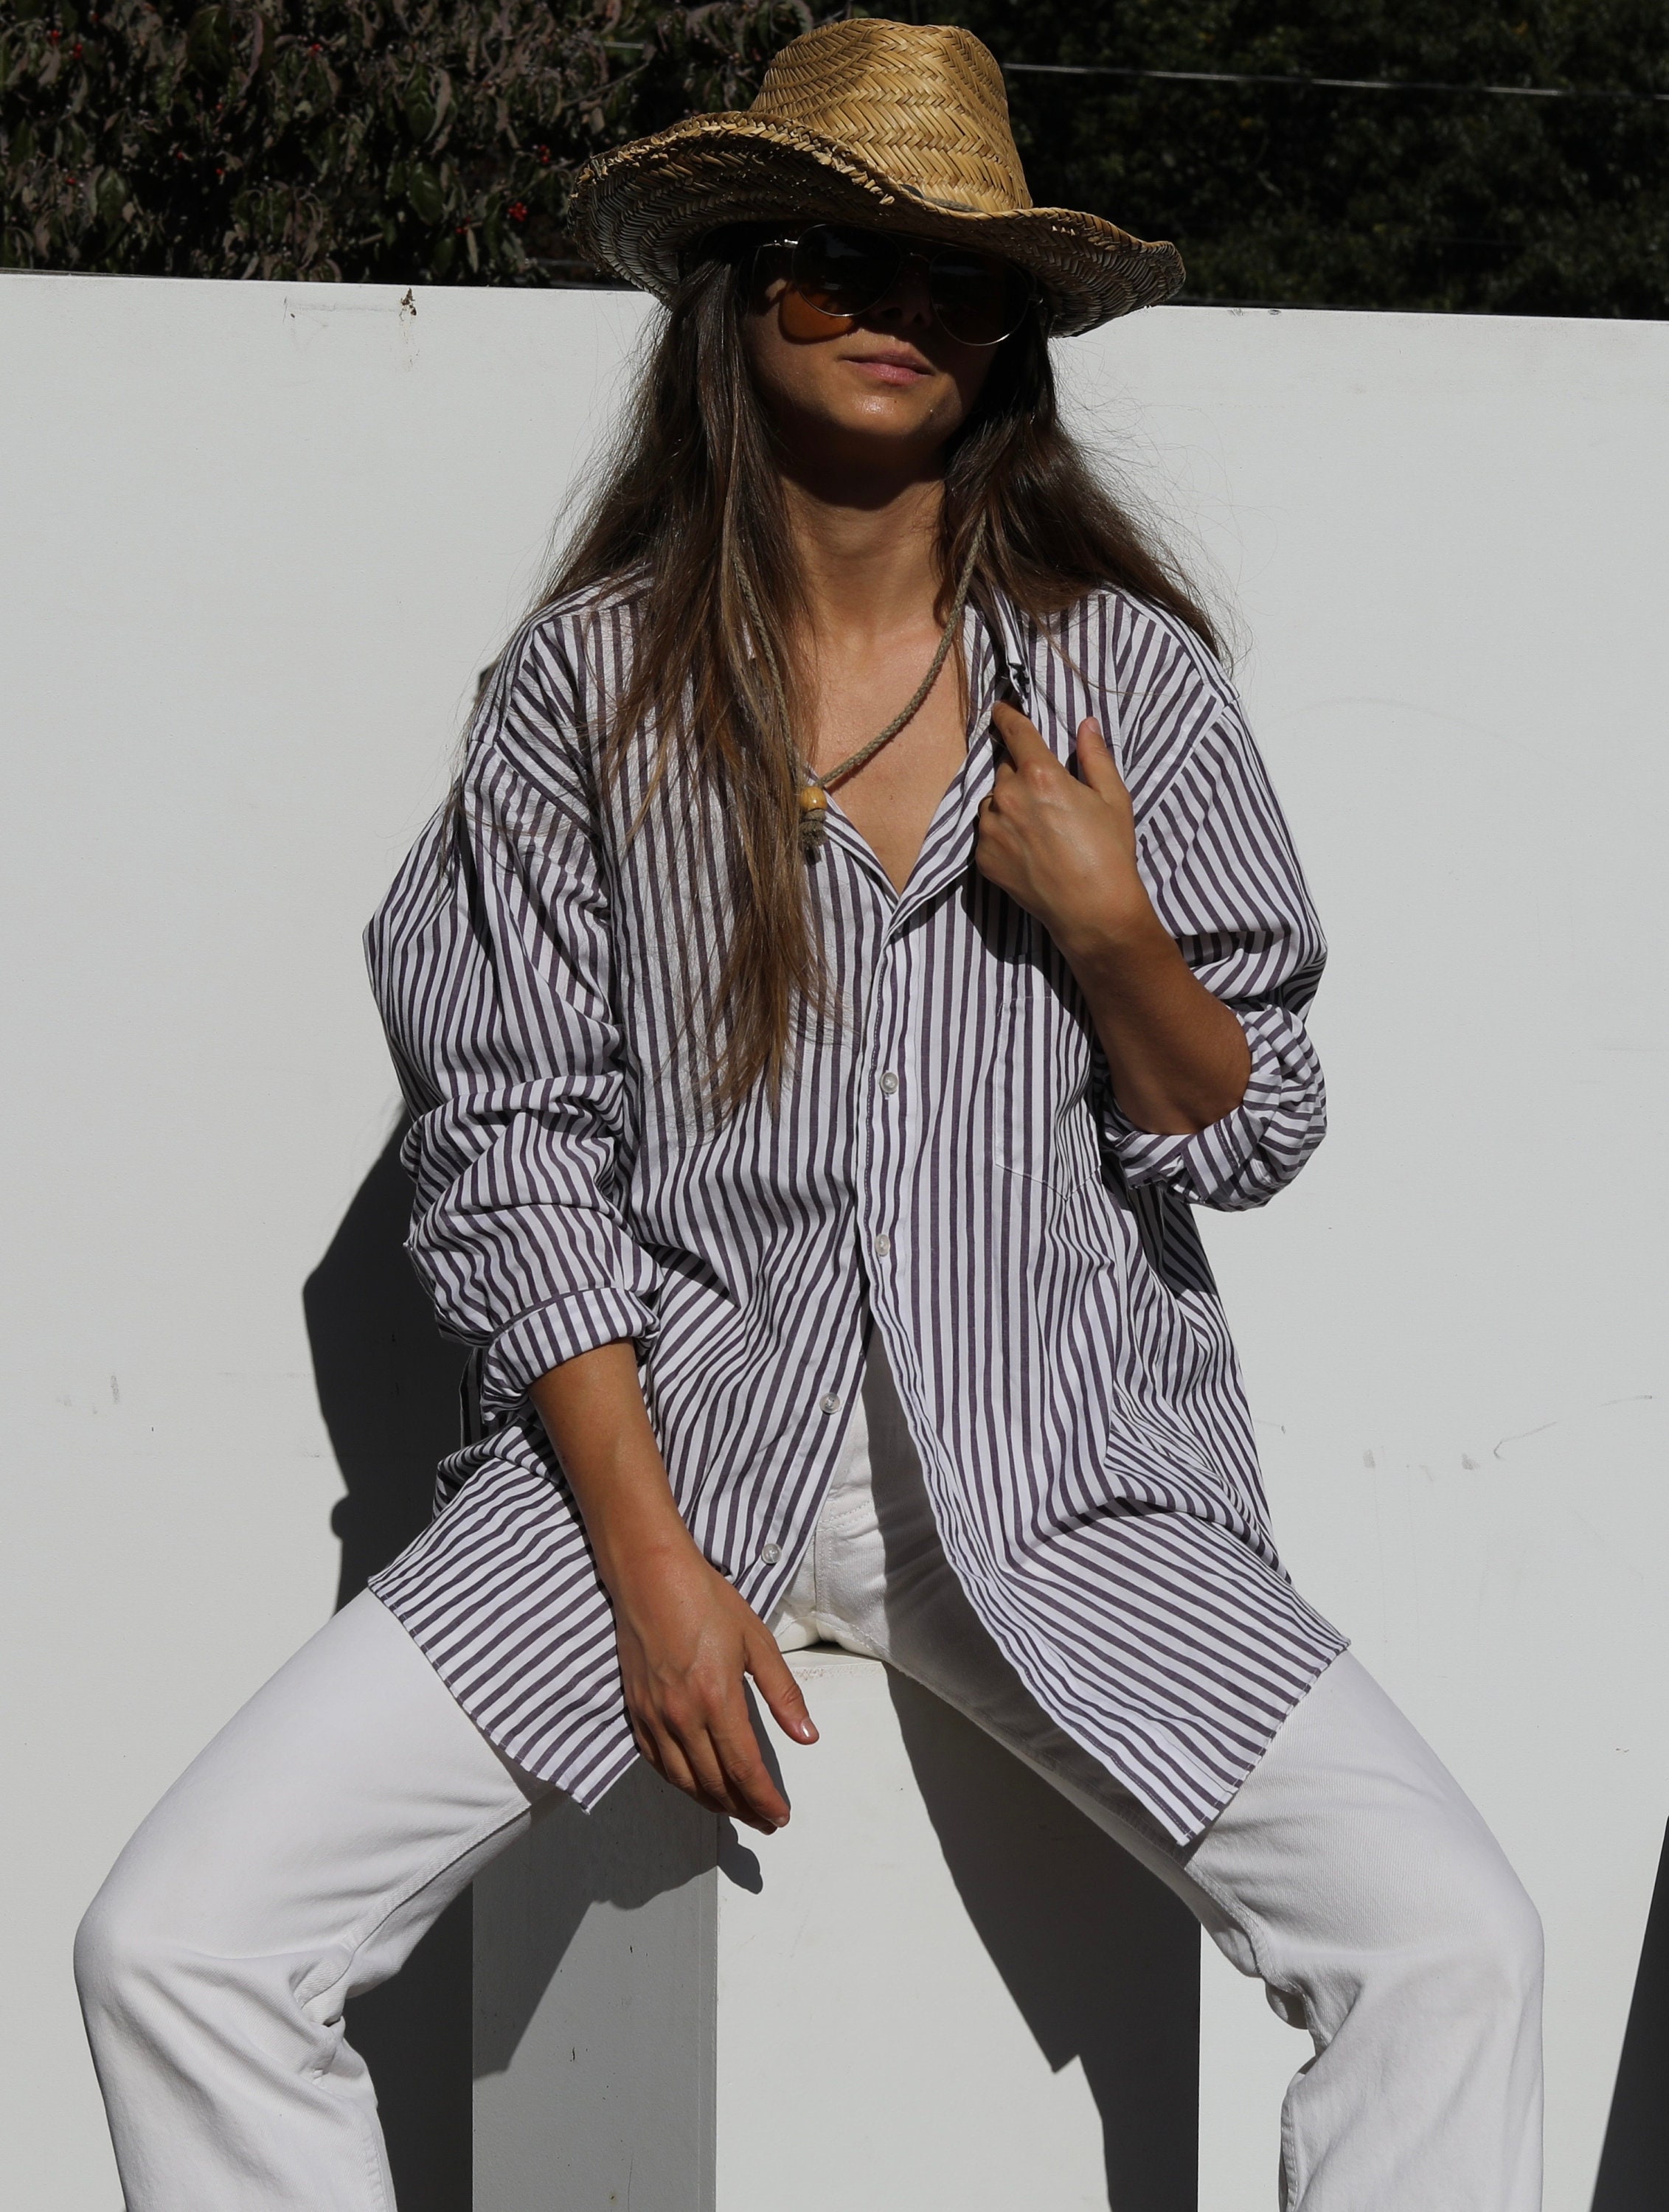 1980s Yves Saint Laurent White Button Down Long Sleeve Cotton Blend Shirt —  Canned Ham Vintage